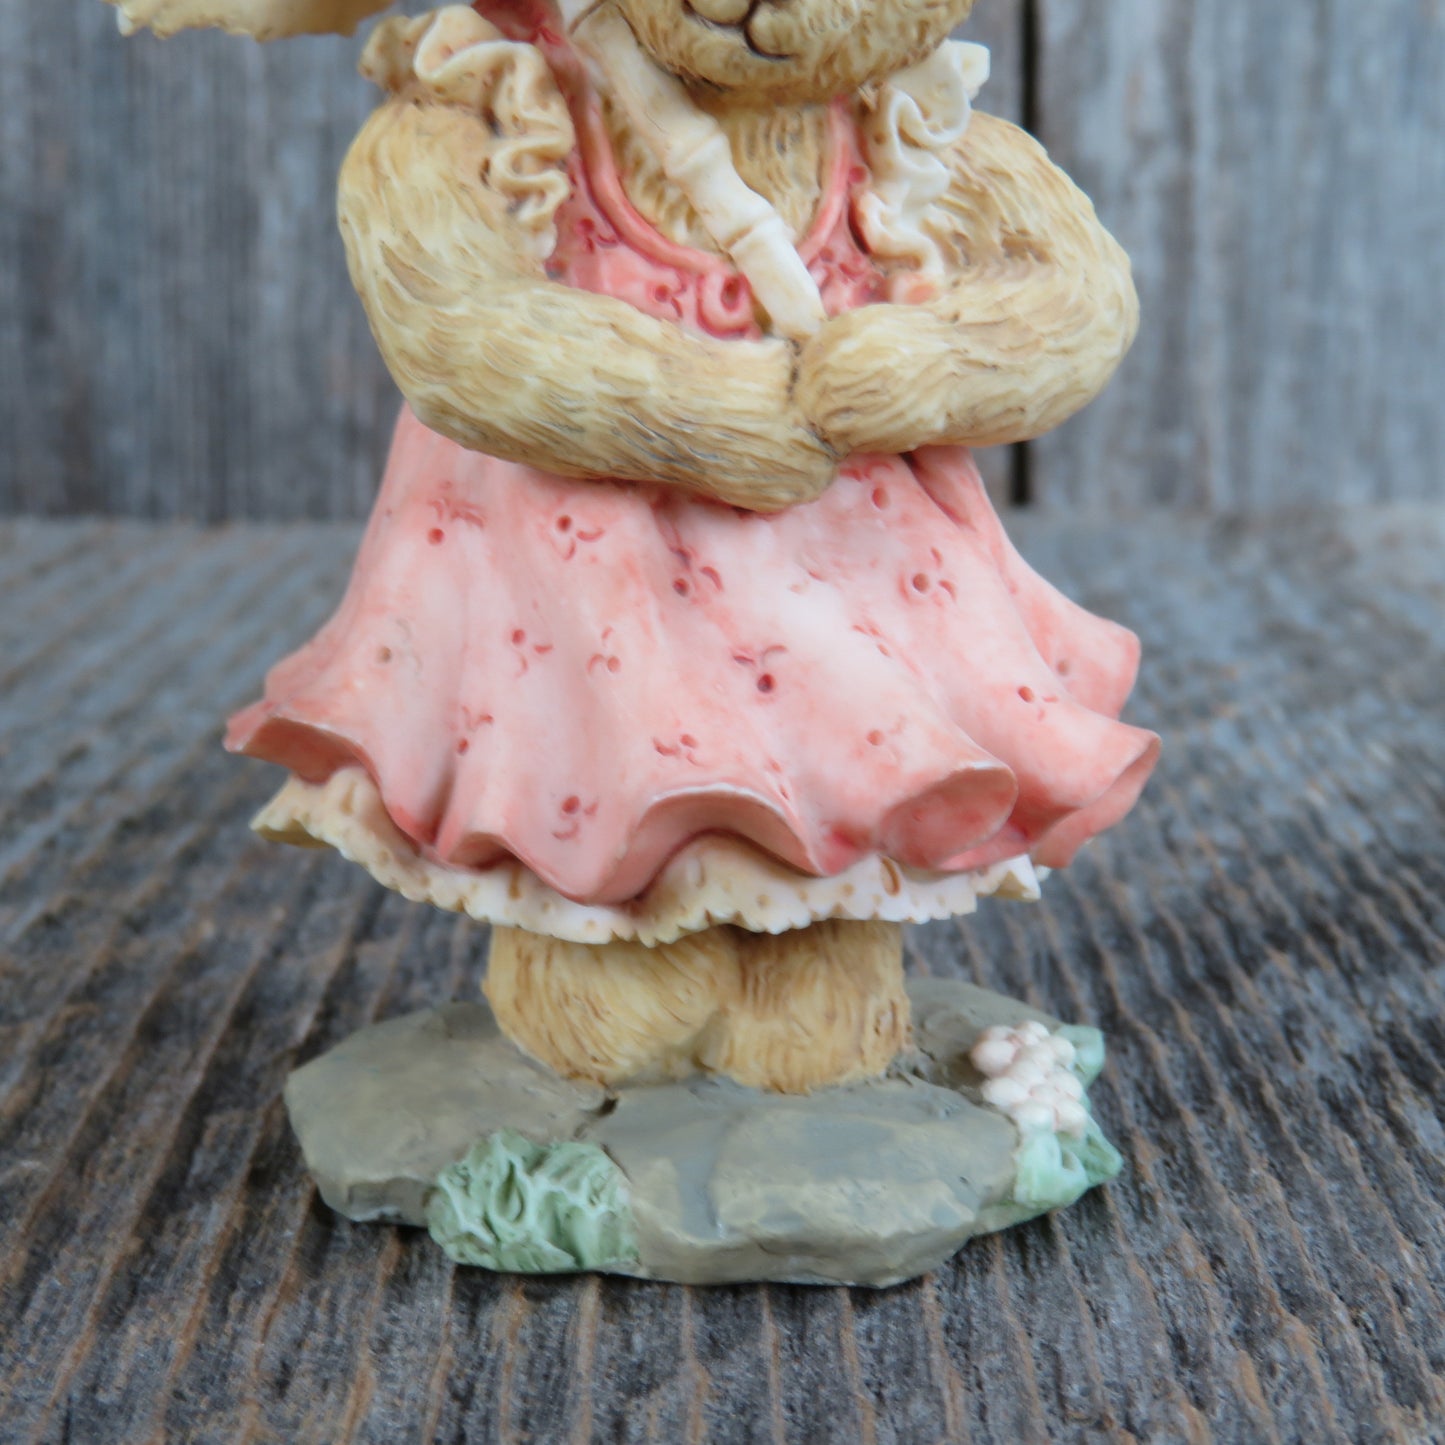 Vintage Bear with Umbrella Figurine Parasol Pink Dress Grandma's Attic Dilly Dally Ganz Resin 1993 TT102